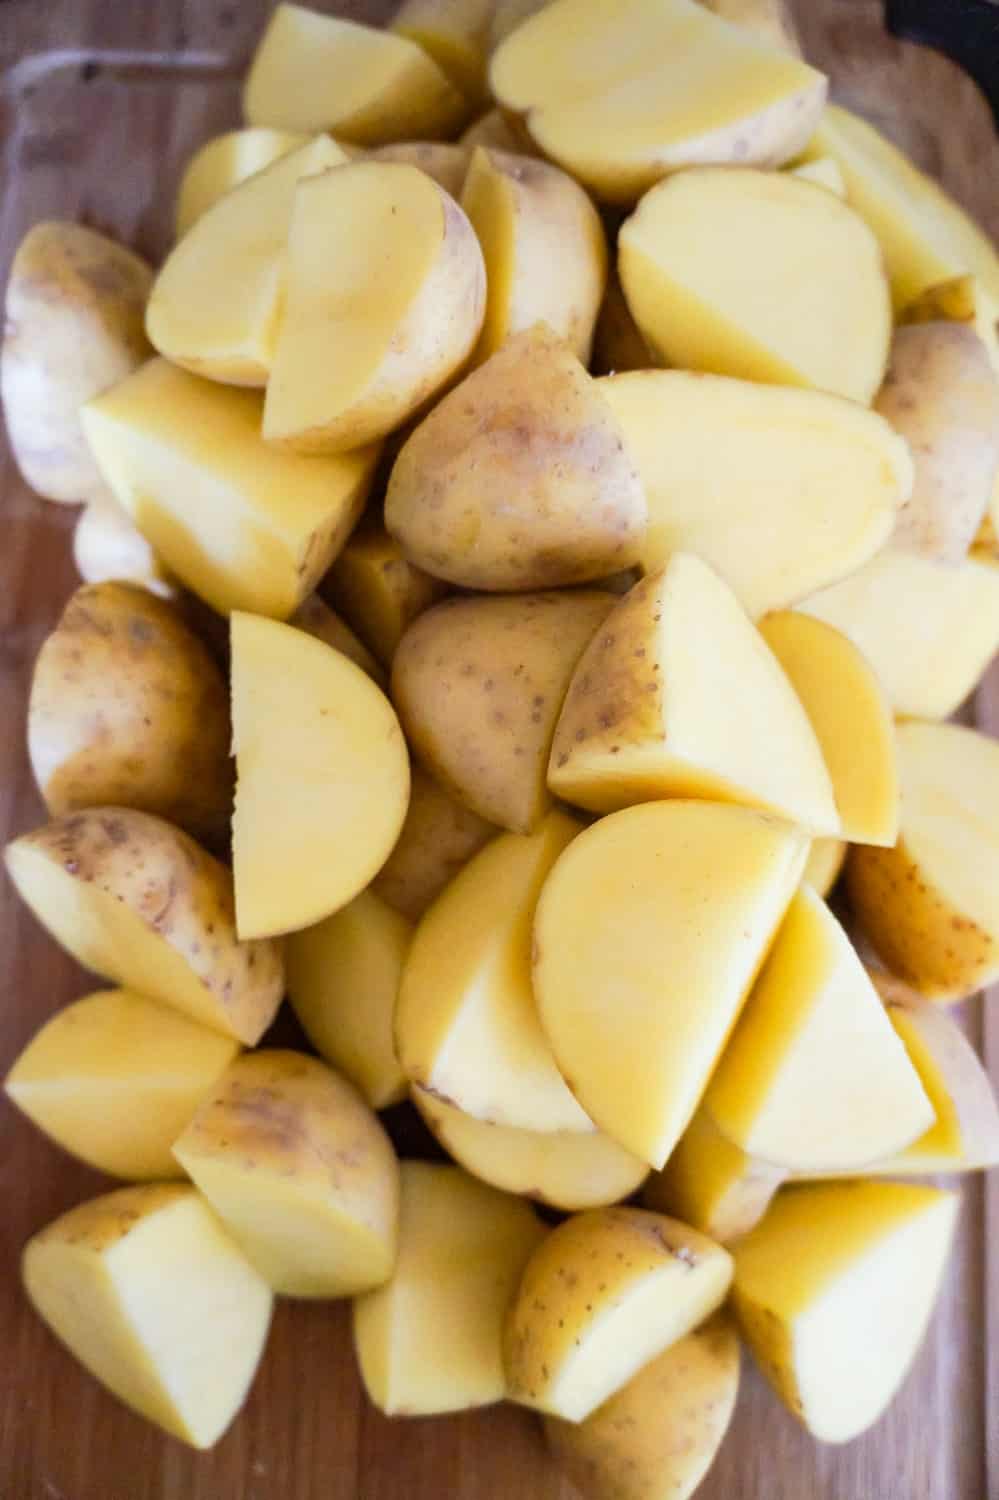 quartered potatoes on a cutting board